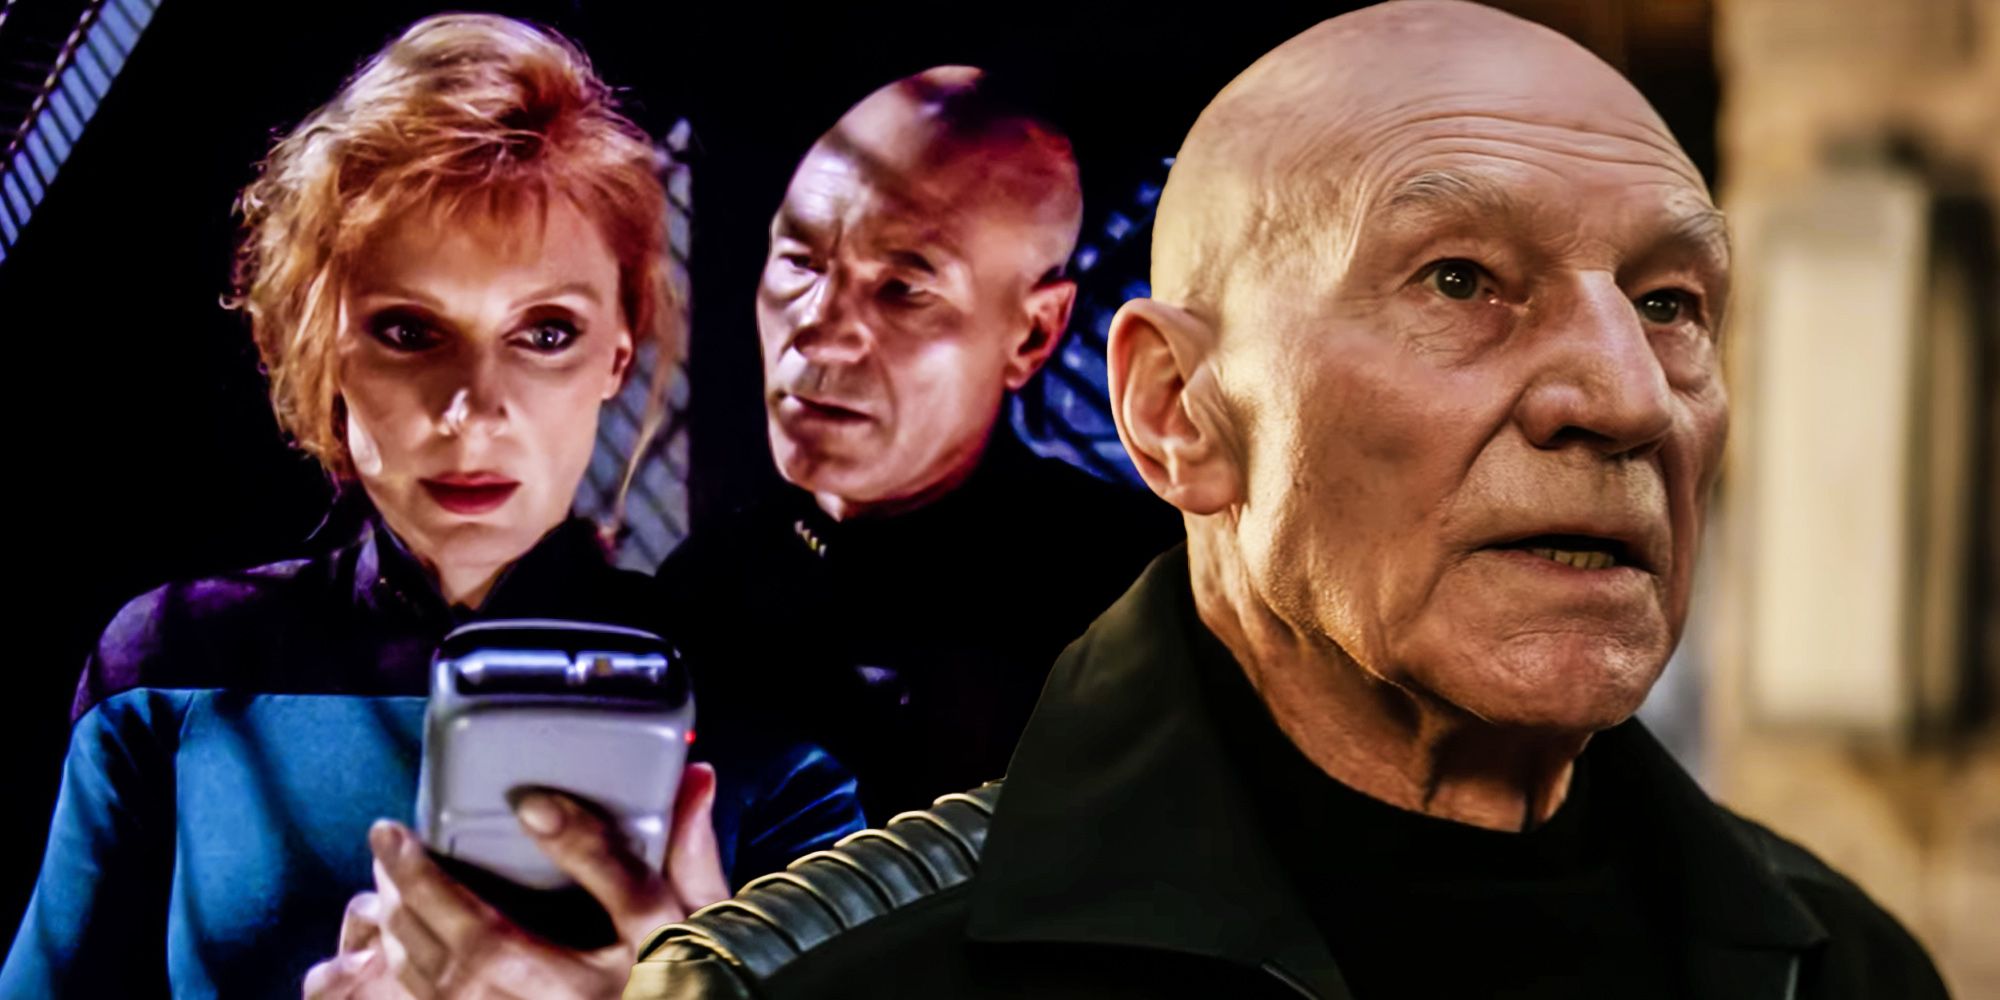 Picard season 3 Dr Crusher Gates Mcfadden